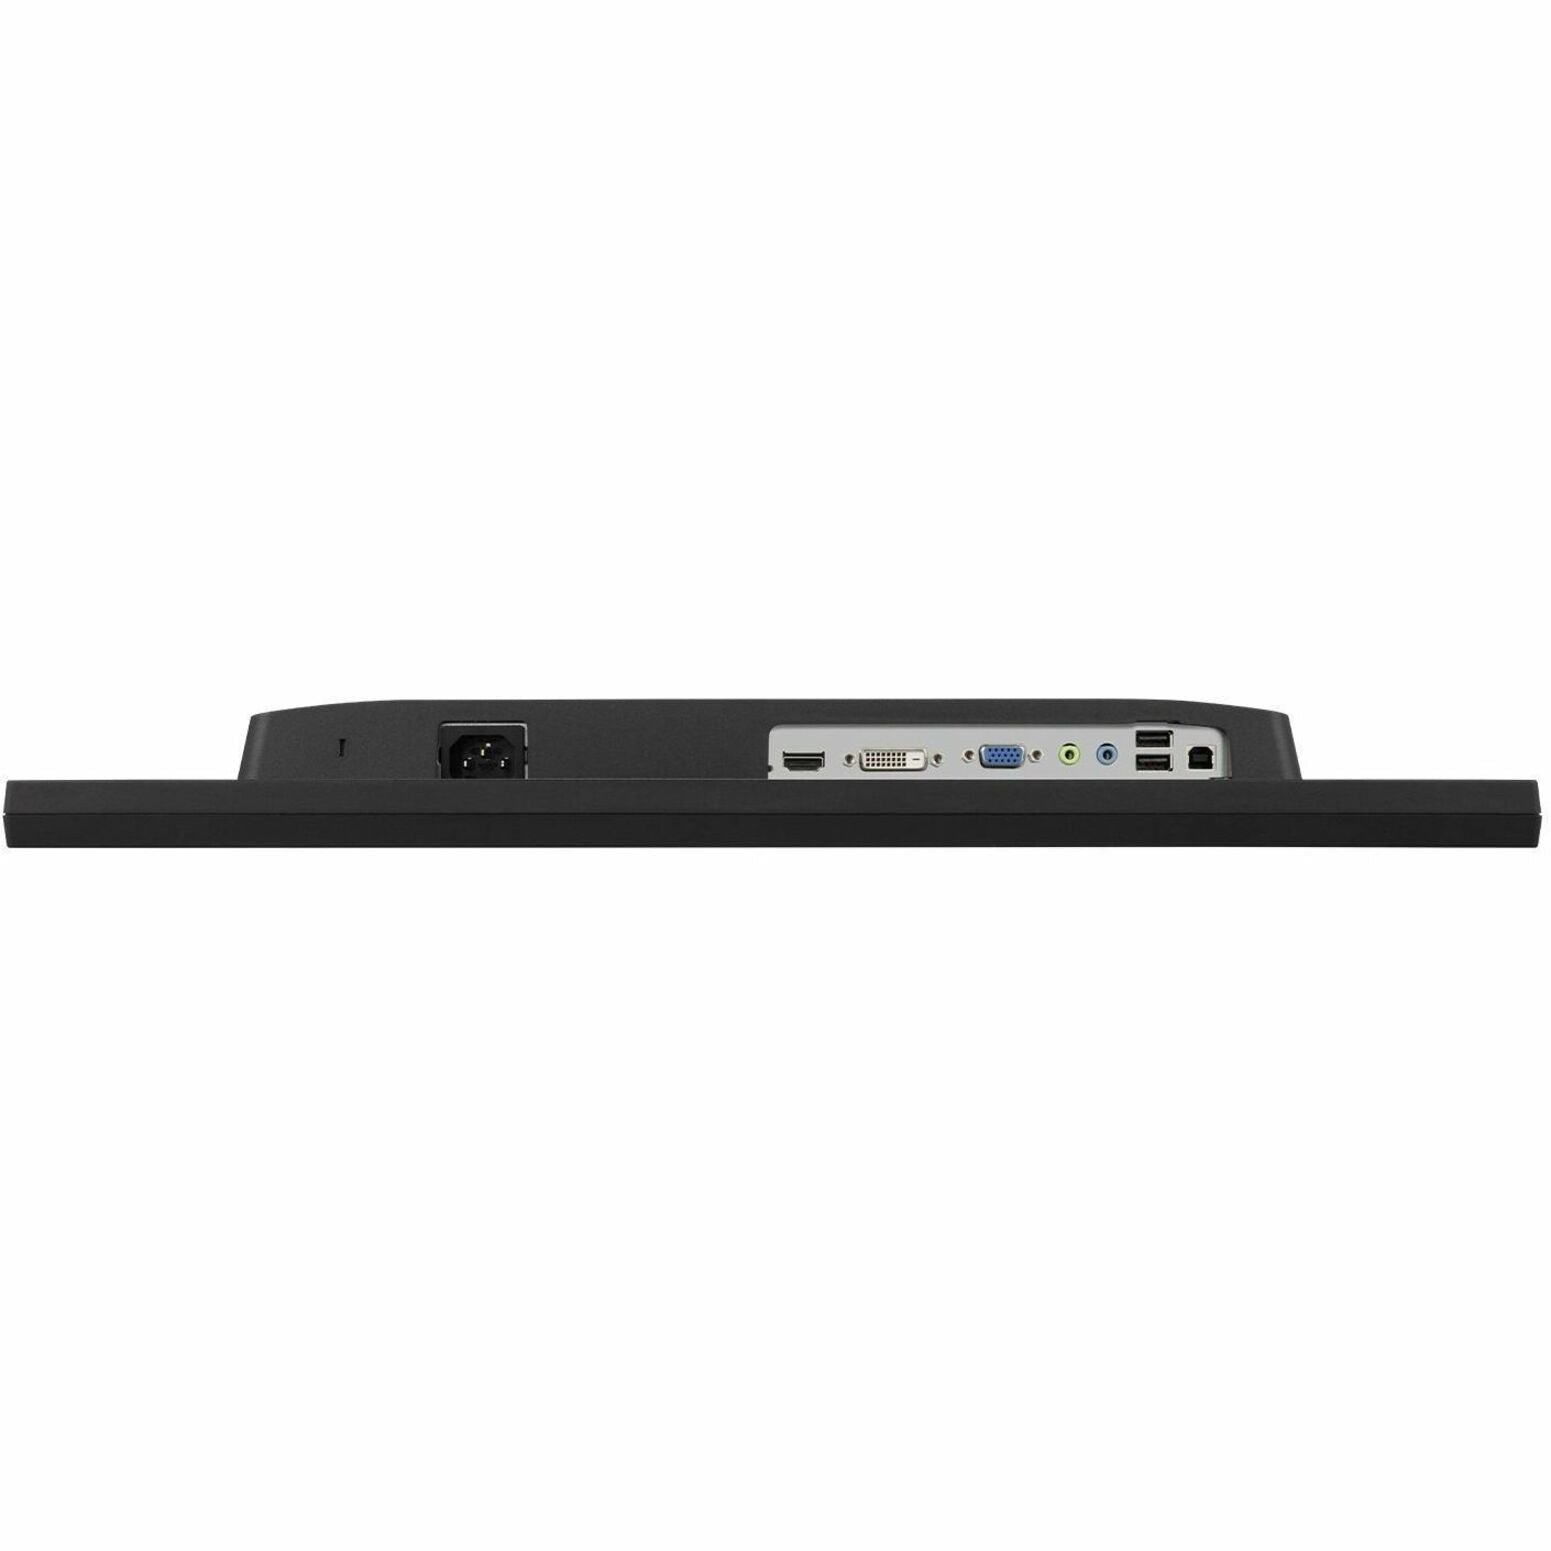 ViewSonic TD2211 22" LCD FHD Touch Screen Monitor, VGA HDMI DVI USB, Water Resistant, Anti-glare